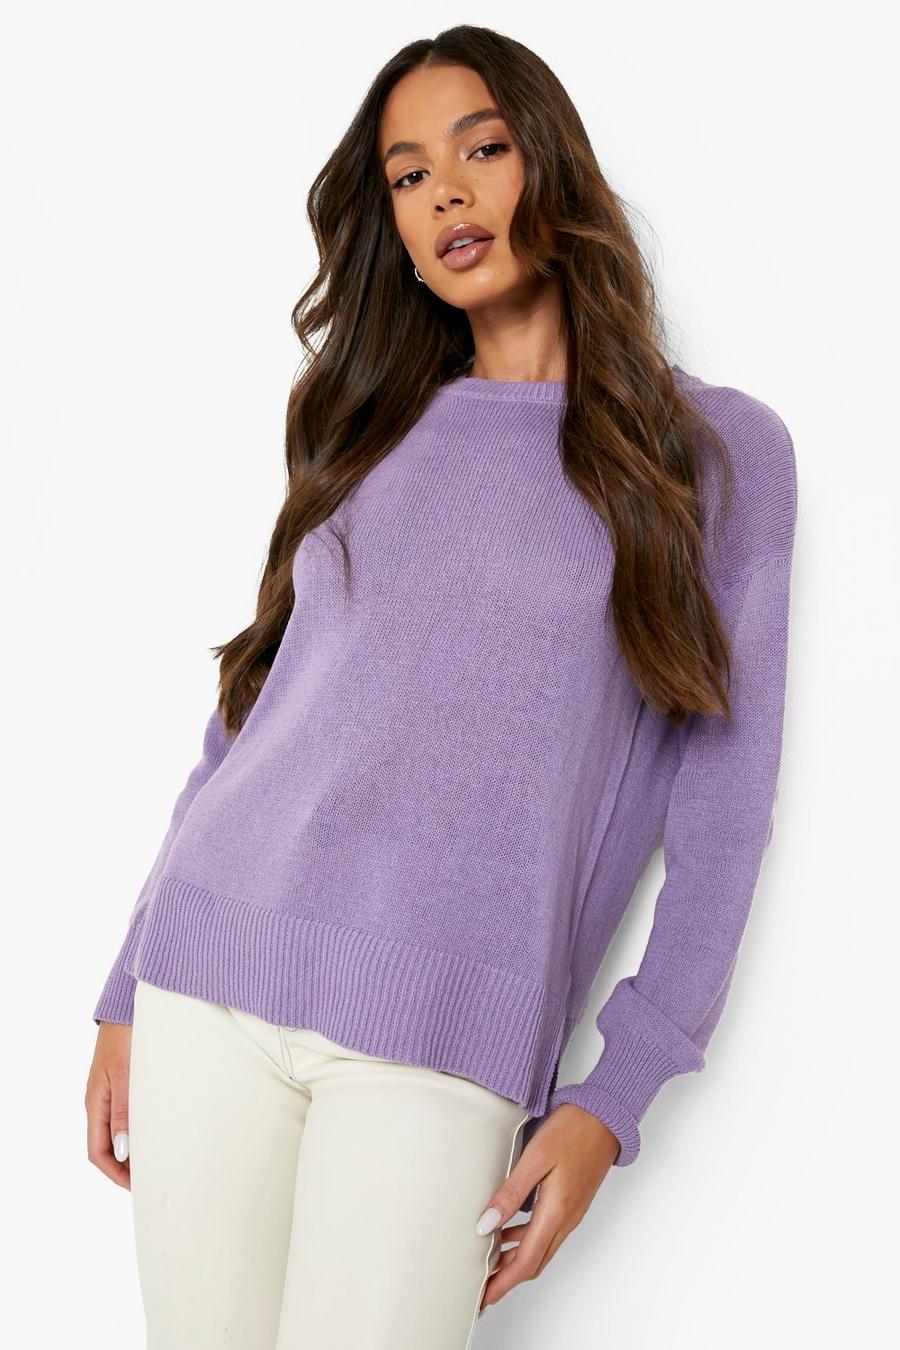 https://media.boohoo.com/i/boohoo/fzz19332_lilac_xl/female-lilac-slouchy-sweater/?w=900&qlt=default&fmt.jp2.qlt=70&fmt=auto&sm=fit